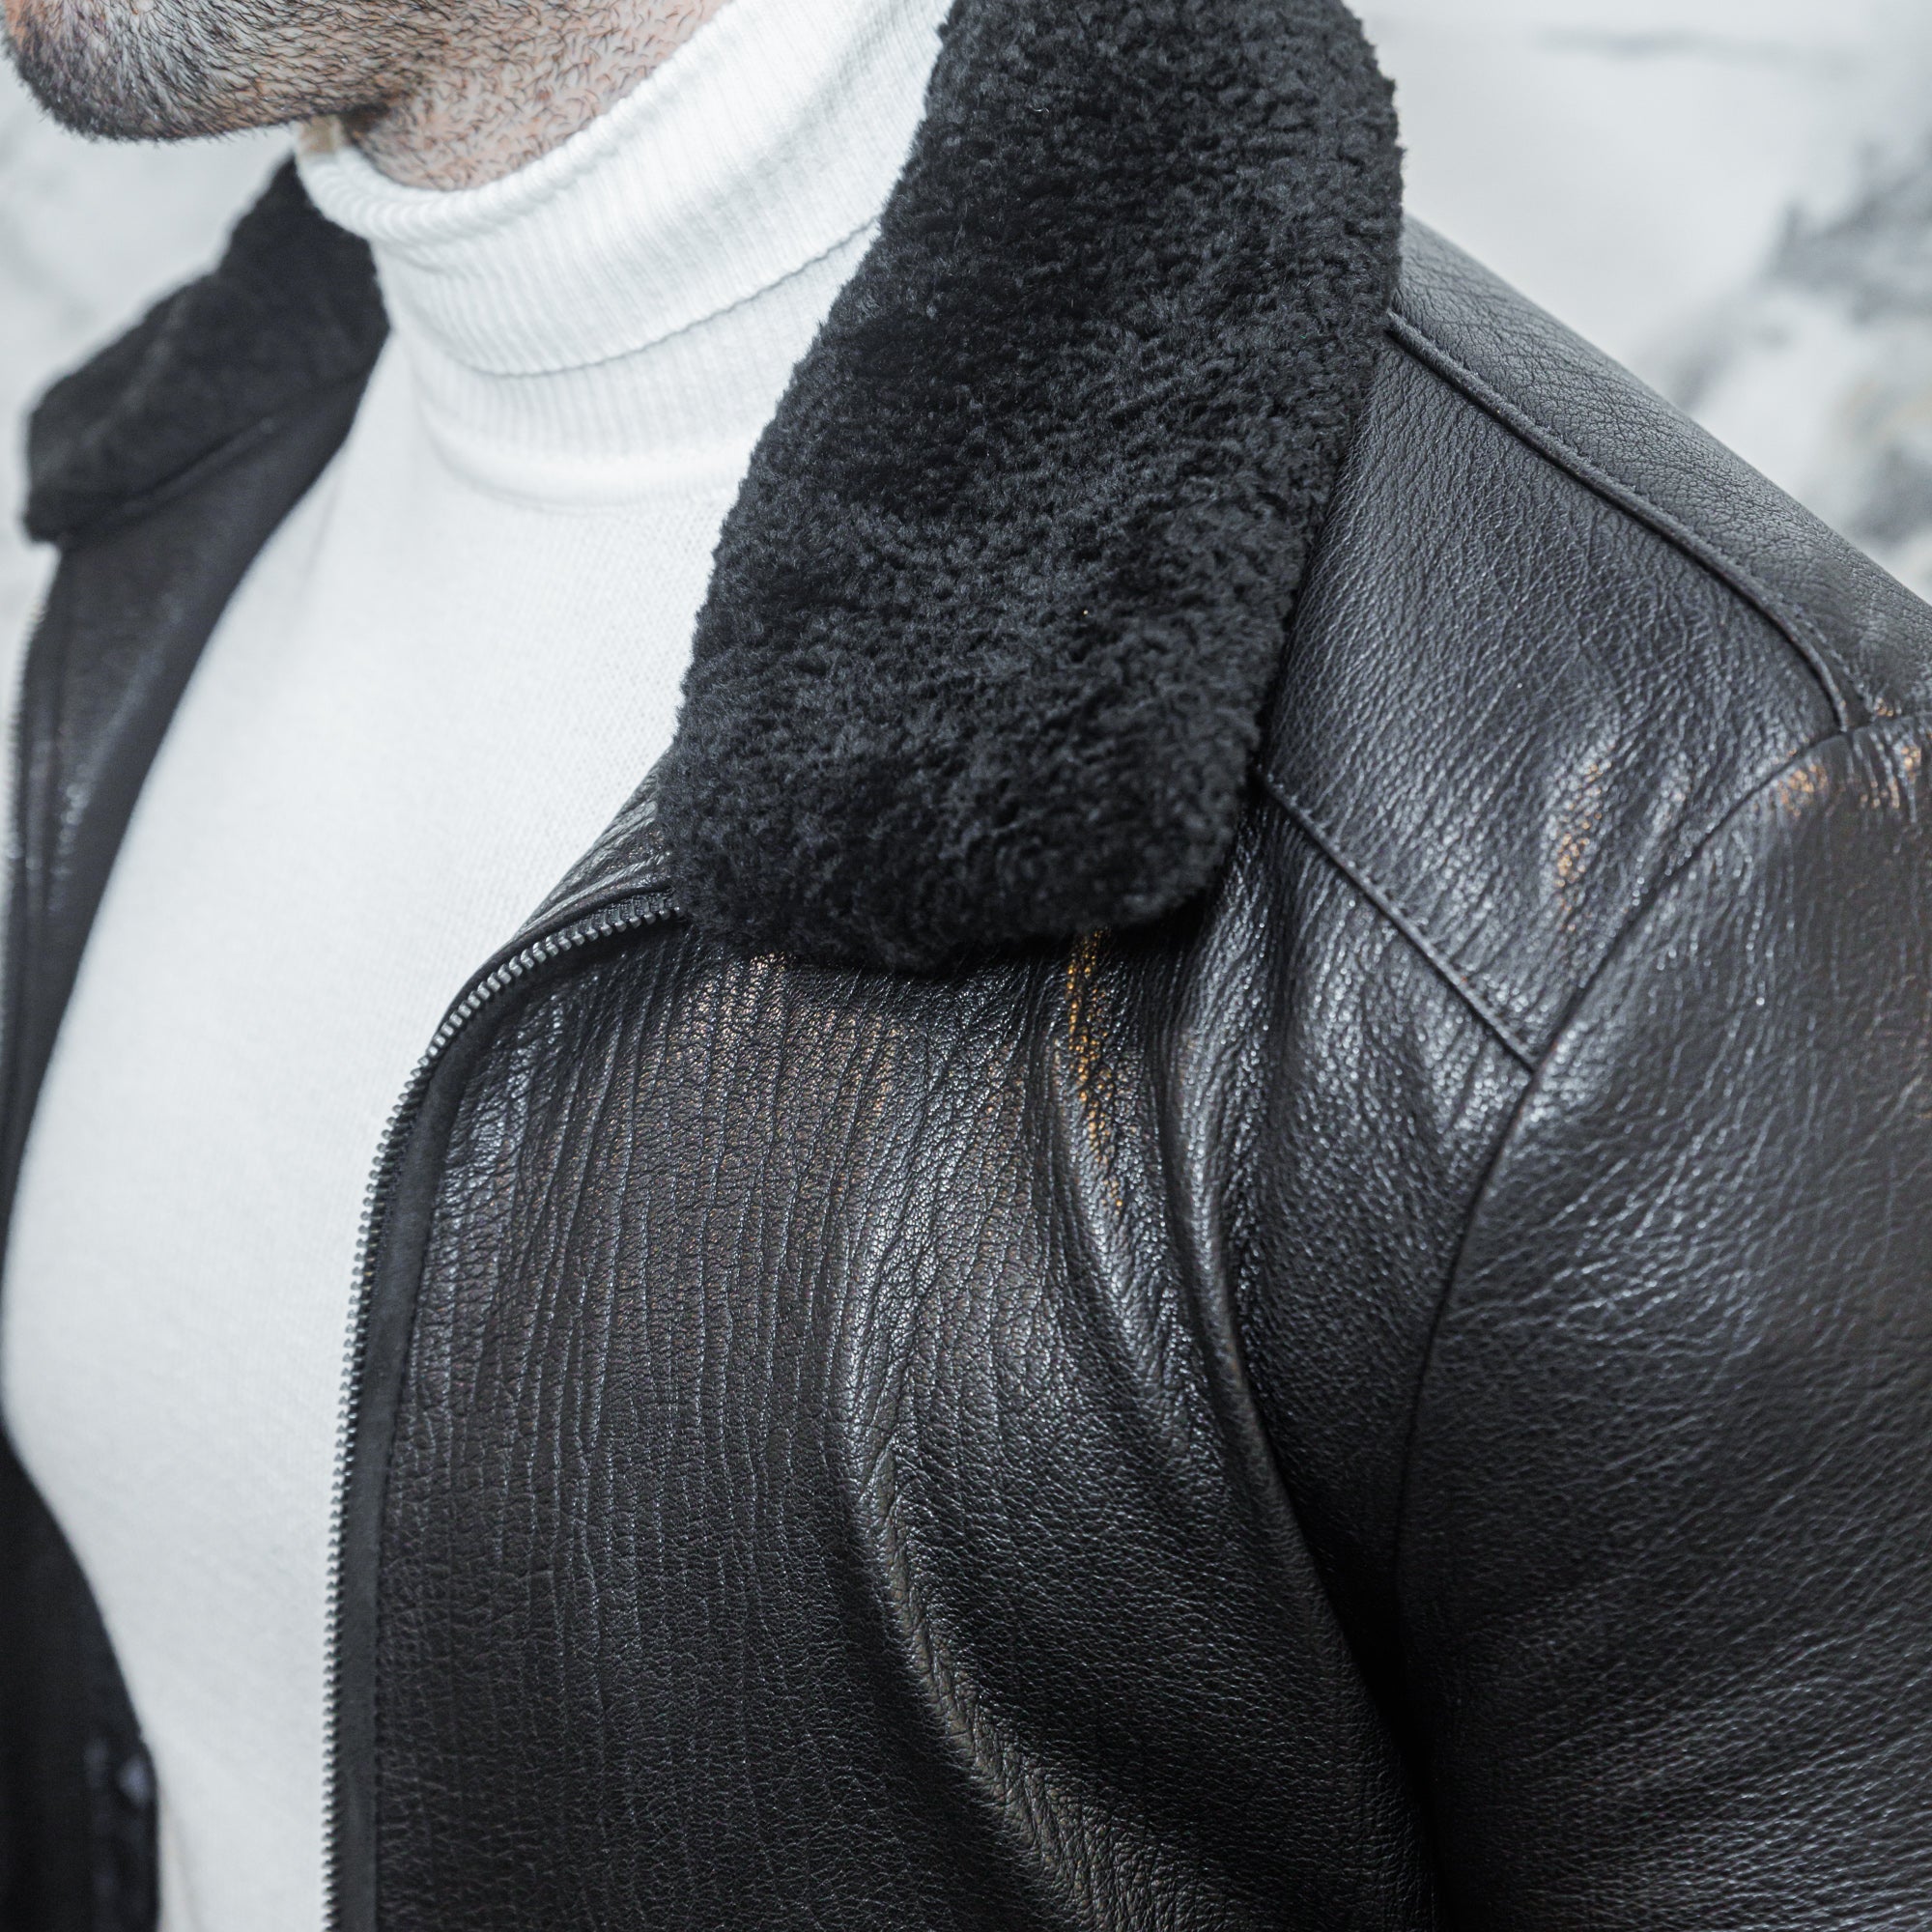 Shearling Collar Leather Jacket - Black - Leather Jacket by Urbbana